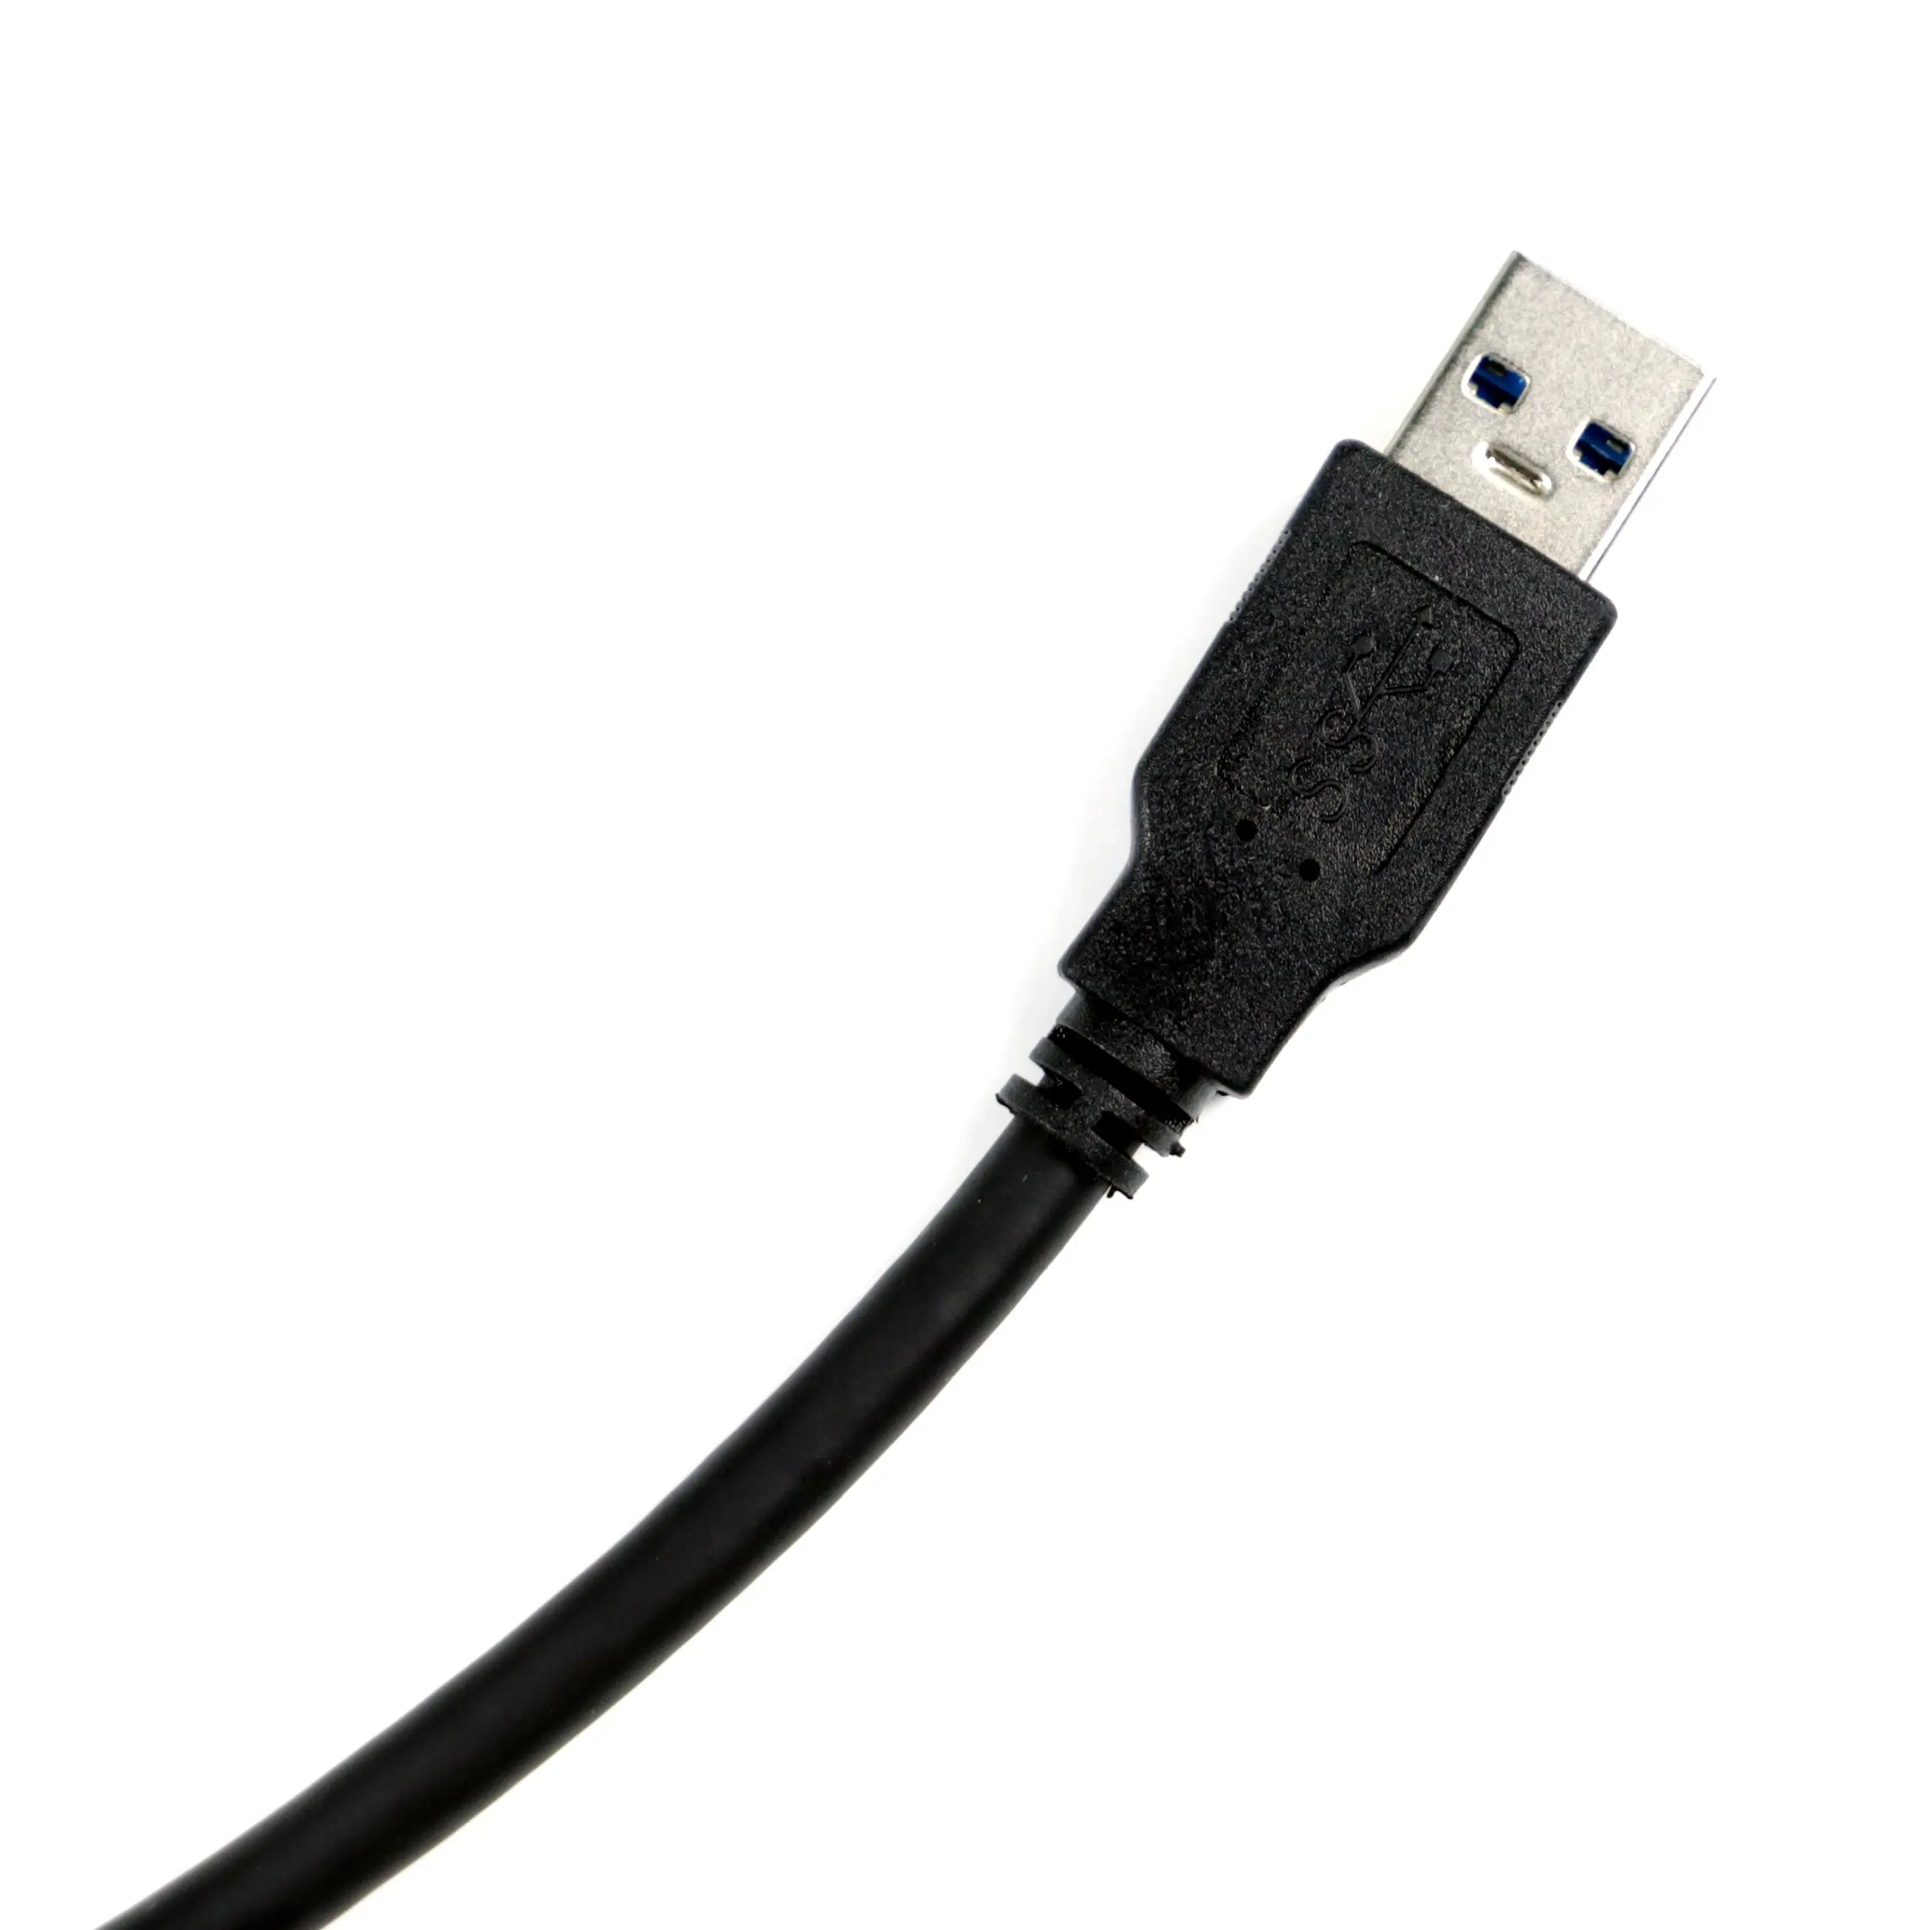 USB 남성 DC3.5 * 1.35 배럴 커넥터 케이블 Usb 남성 Dc 잭 플러그 전원 연장 케이블